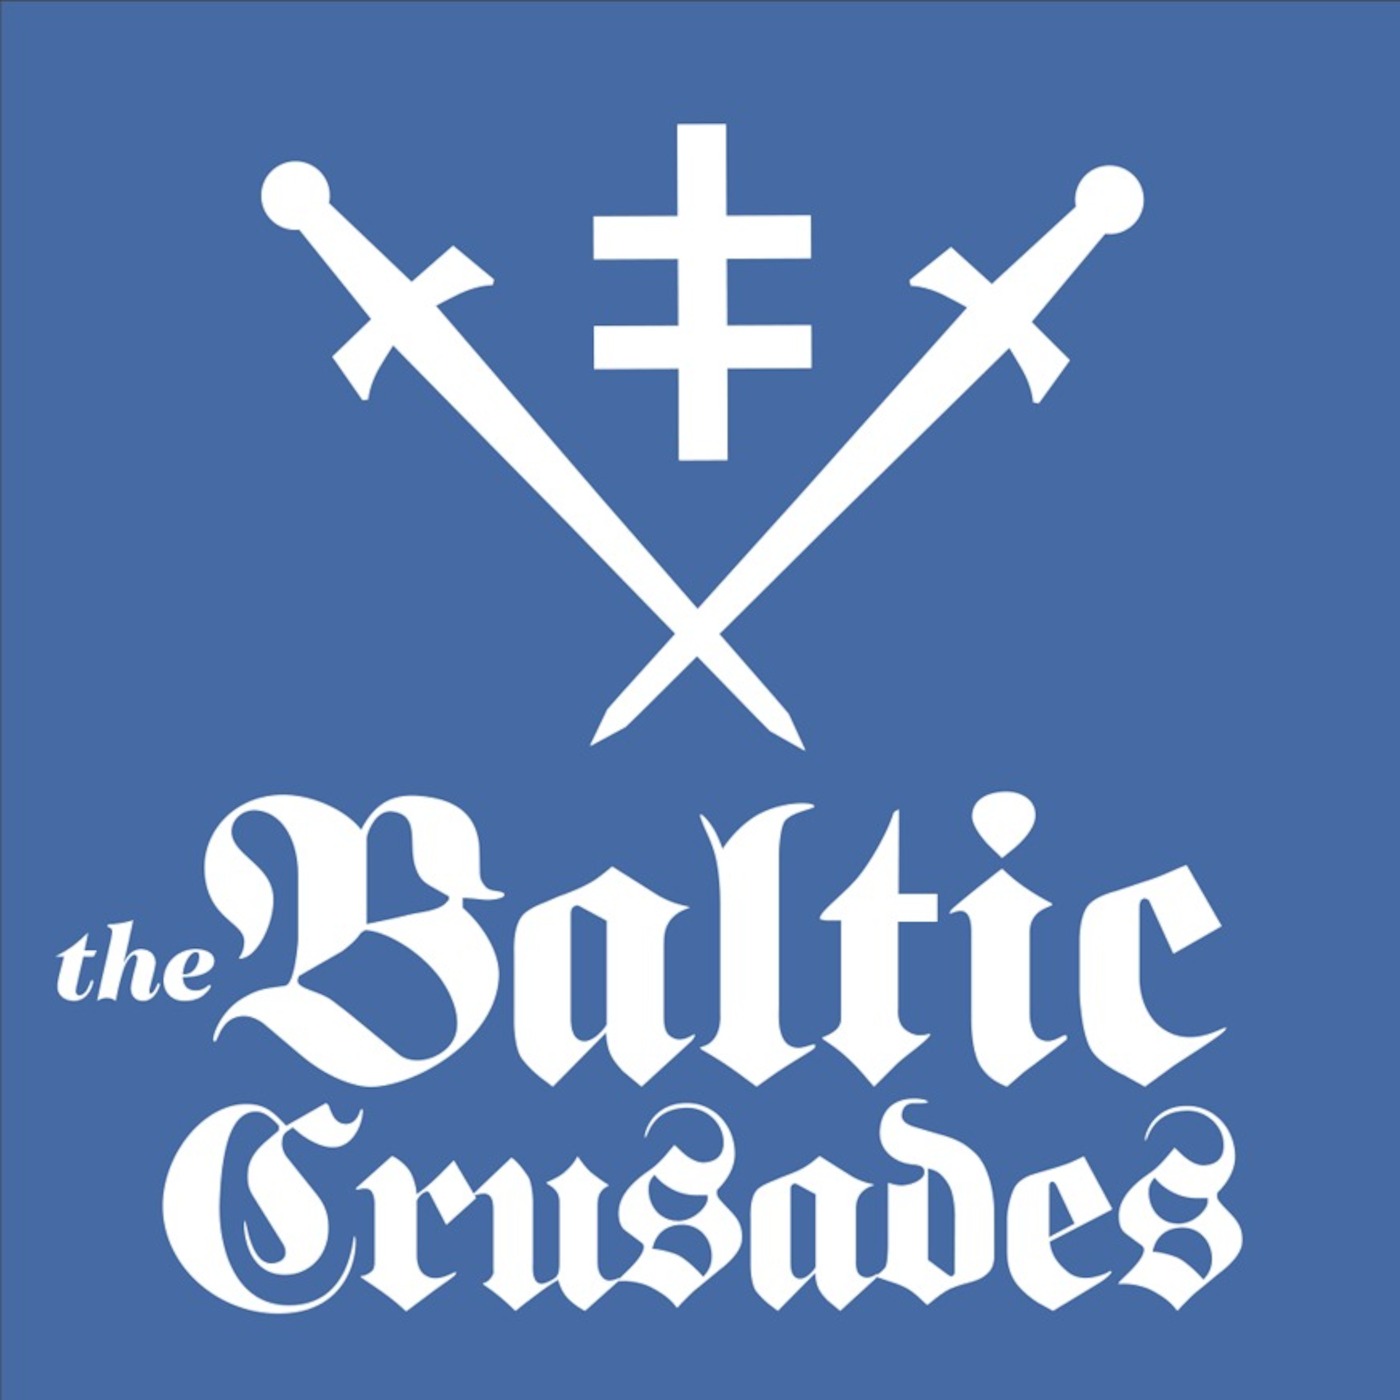 Episode 230 - The Baltic Crusades